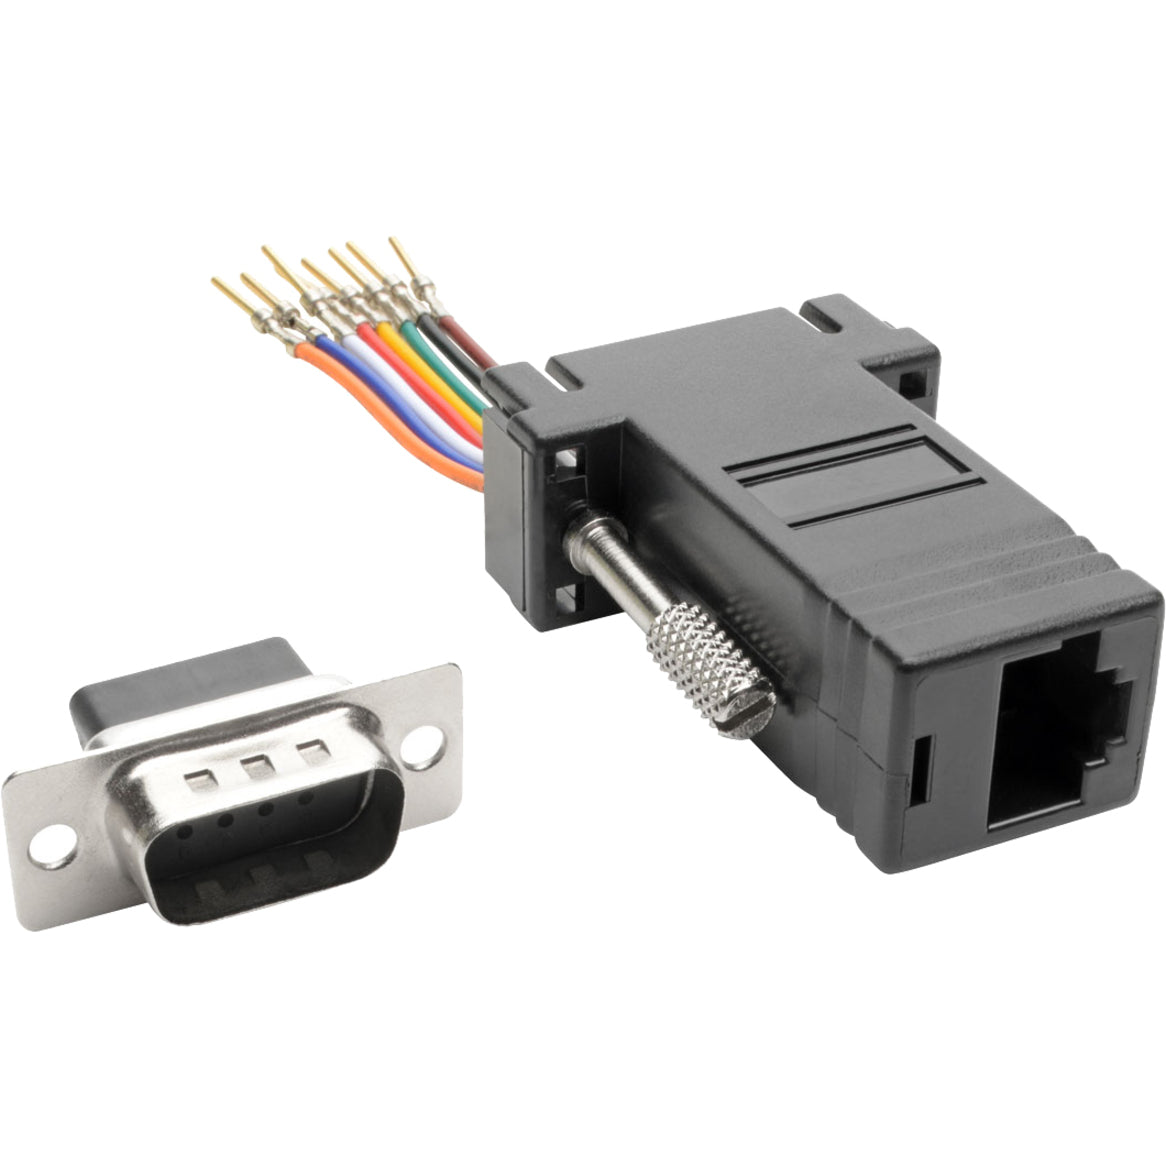 Tripp Lite P440-89FM DB9 to RJ45 Modular Serial Adapter (M/F), Data Transfer Adapter